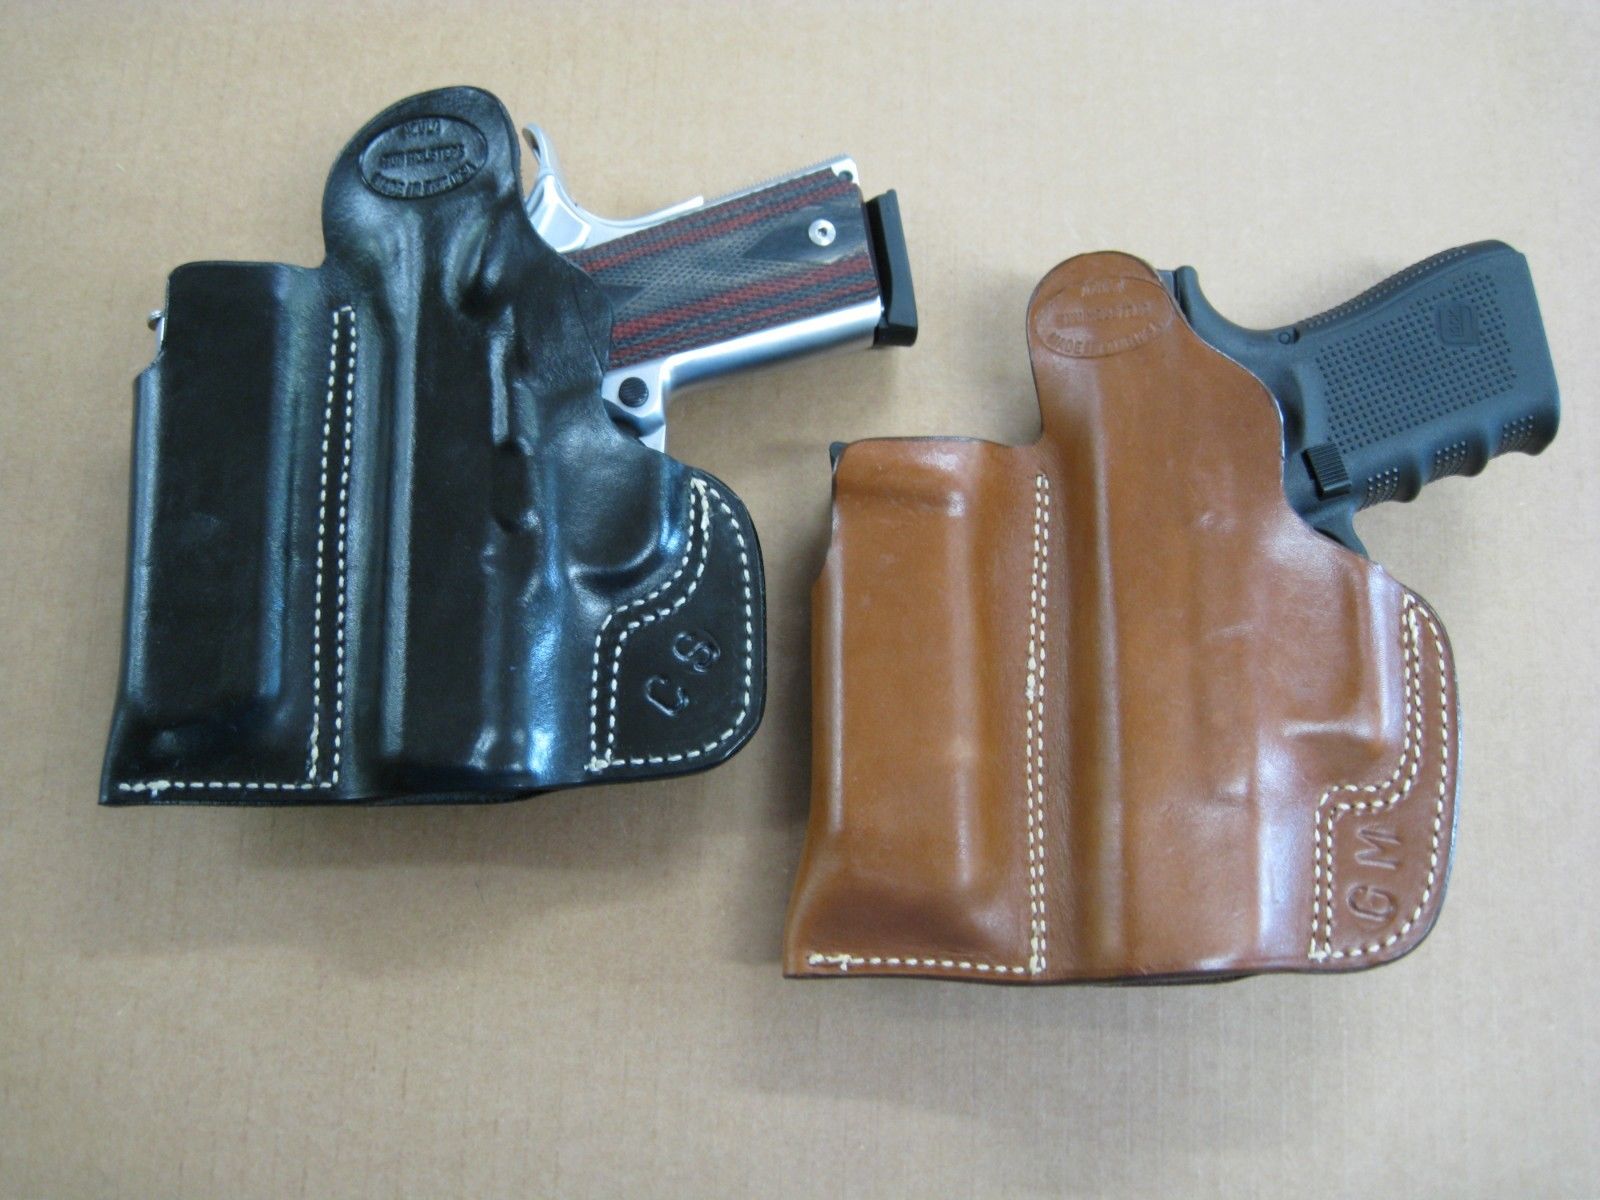 iwb magazine holster Kel Tec PF9 9mm pistol black leather pouch